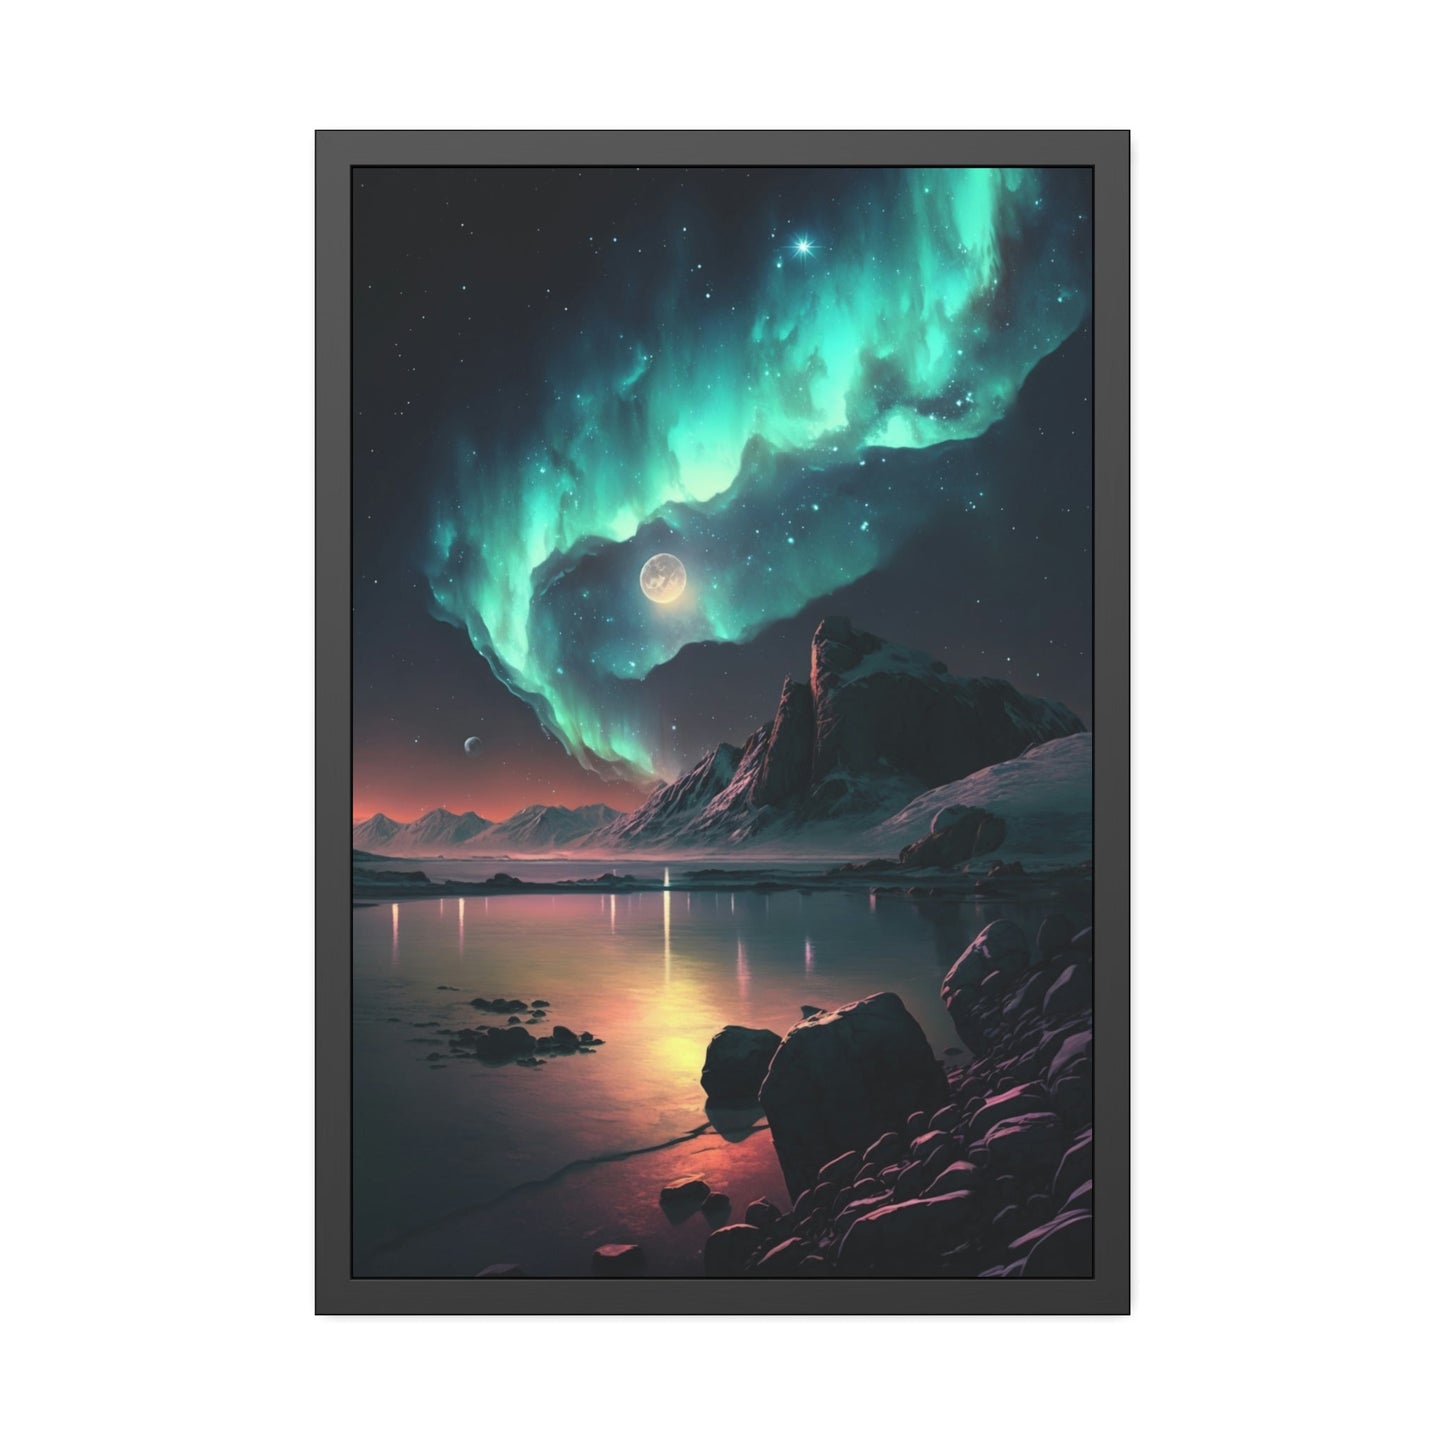 Mesmerizing Aurora Borealis Art Print: High-Quality Wall Decor for Your Space